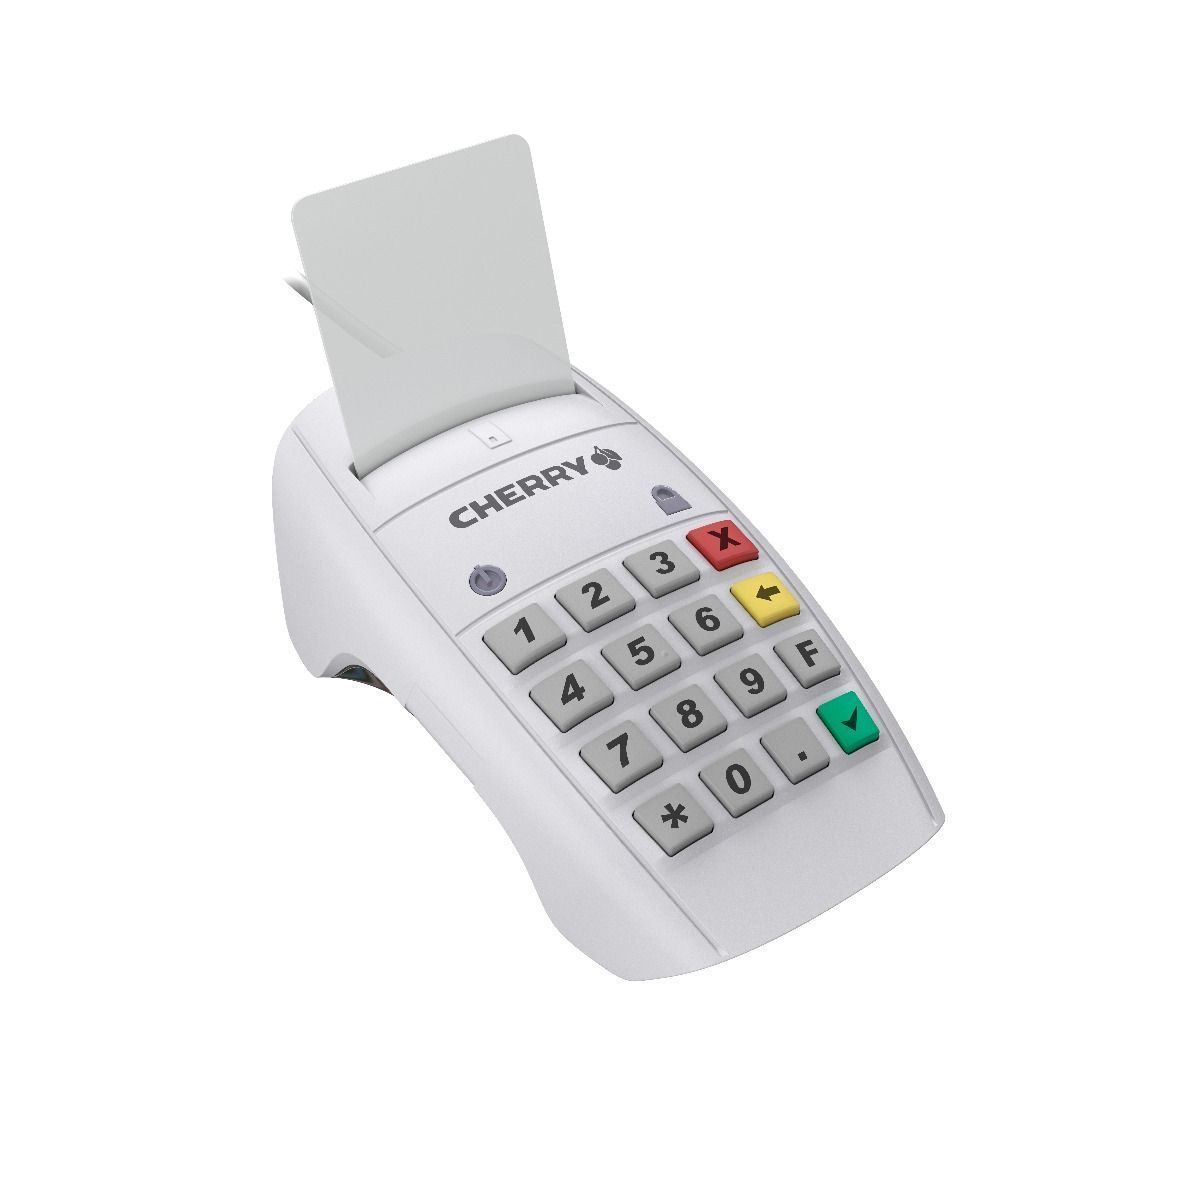 Cherry Smartcard Terminal ST-2100 white USB Contact Smart Card Terminal_2